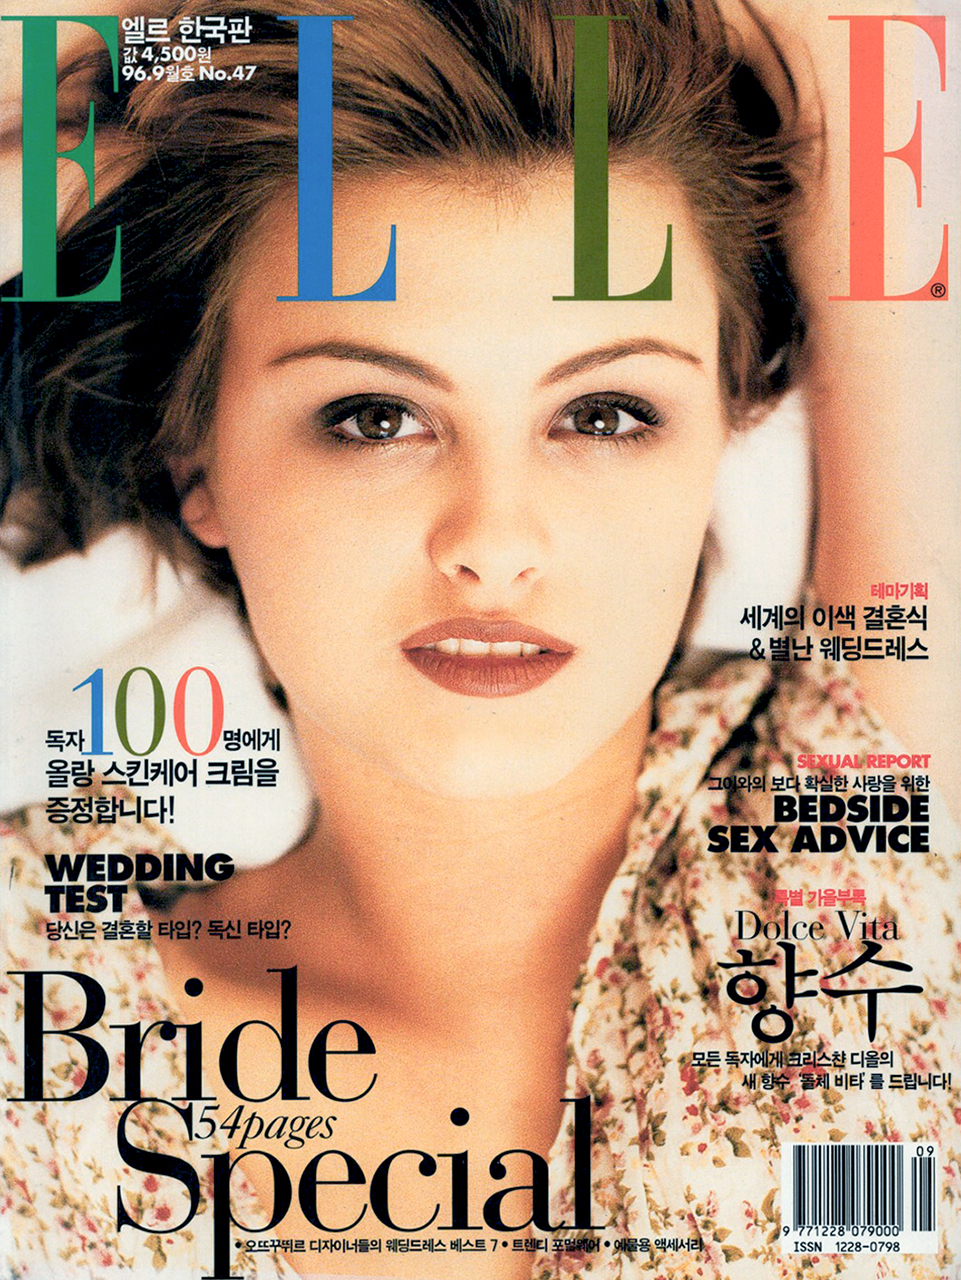 Trish Goff - Elle Korea, September 1996 Cover